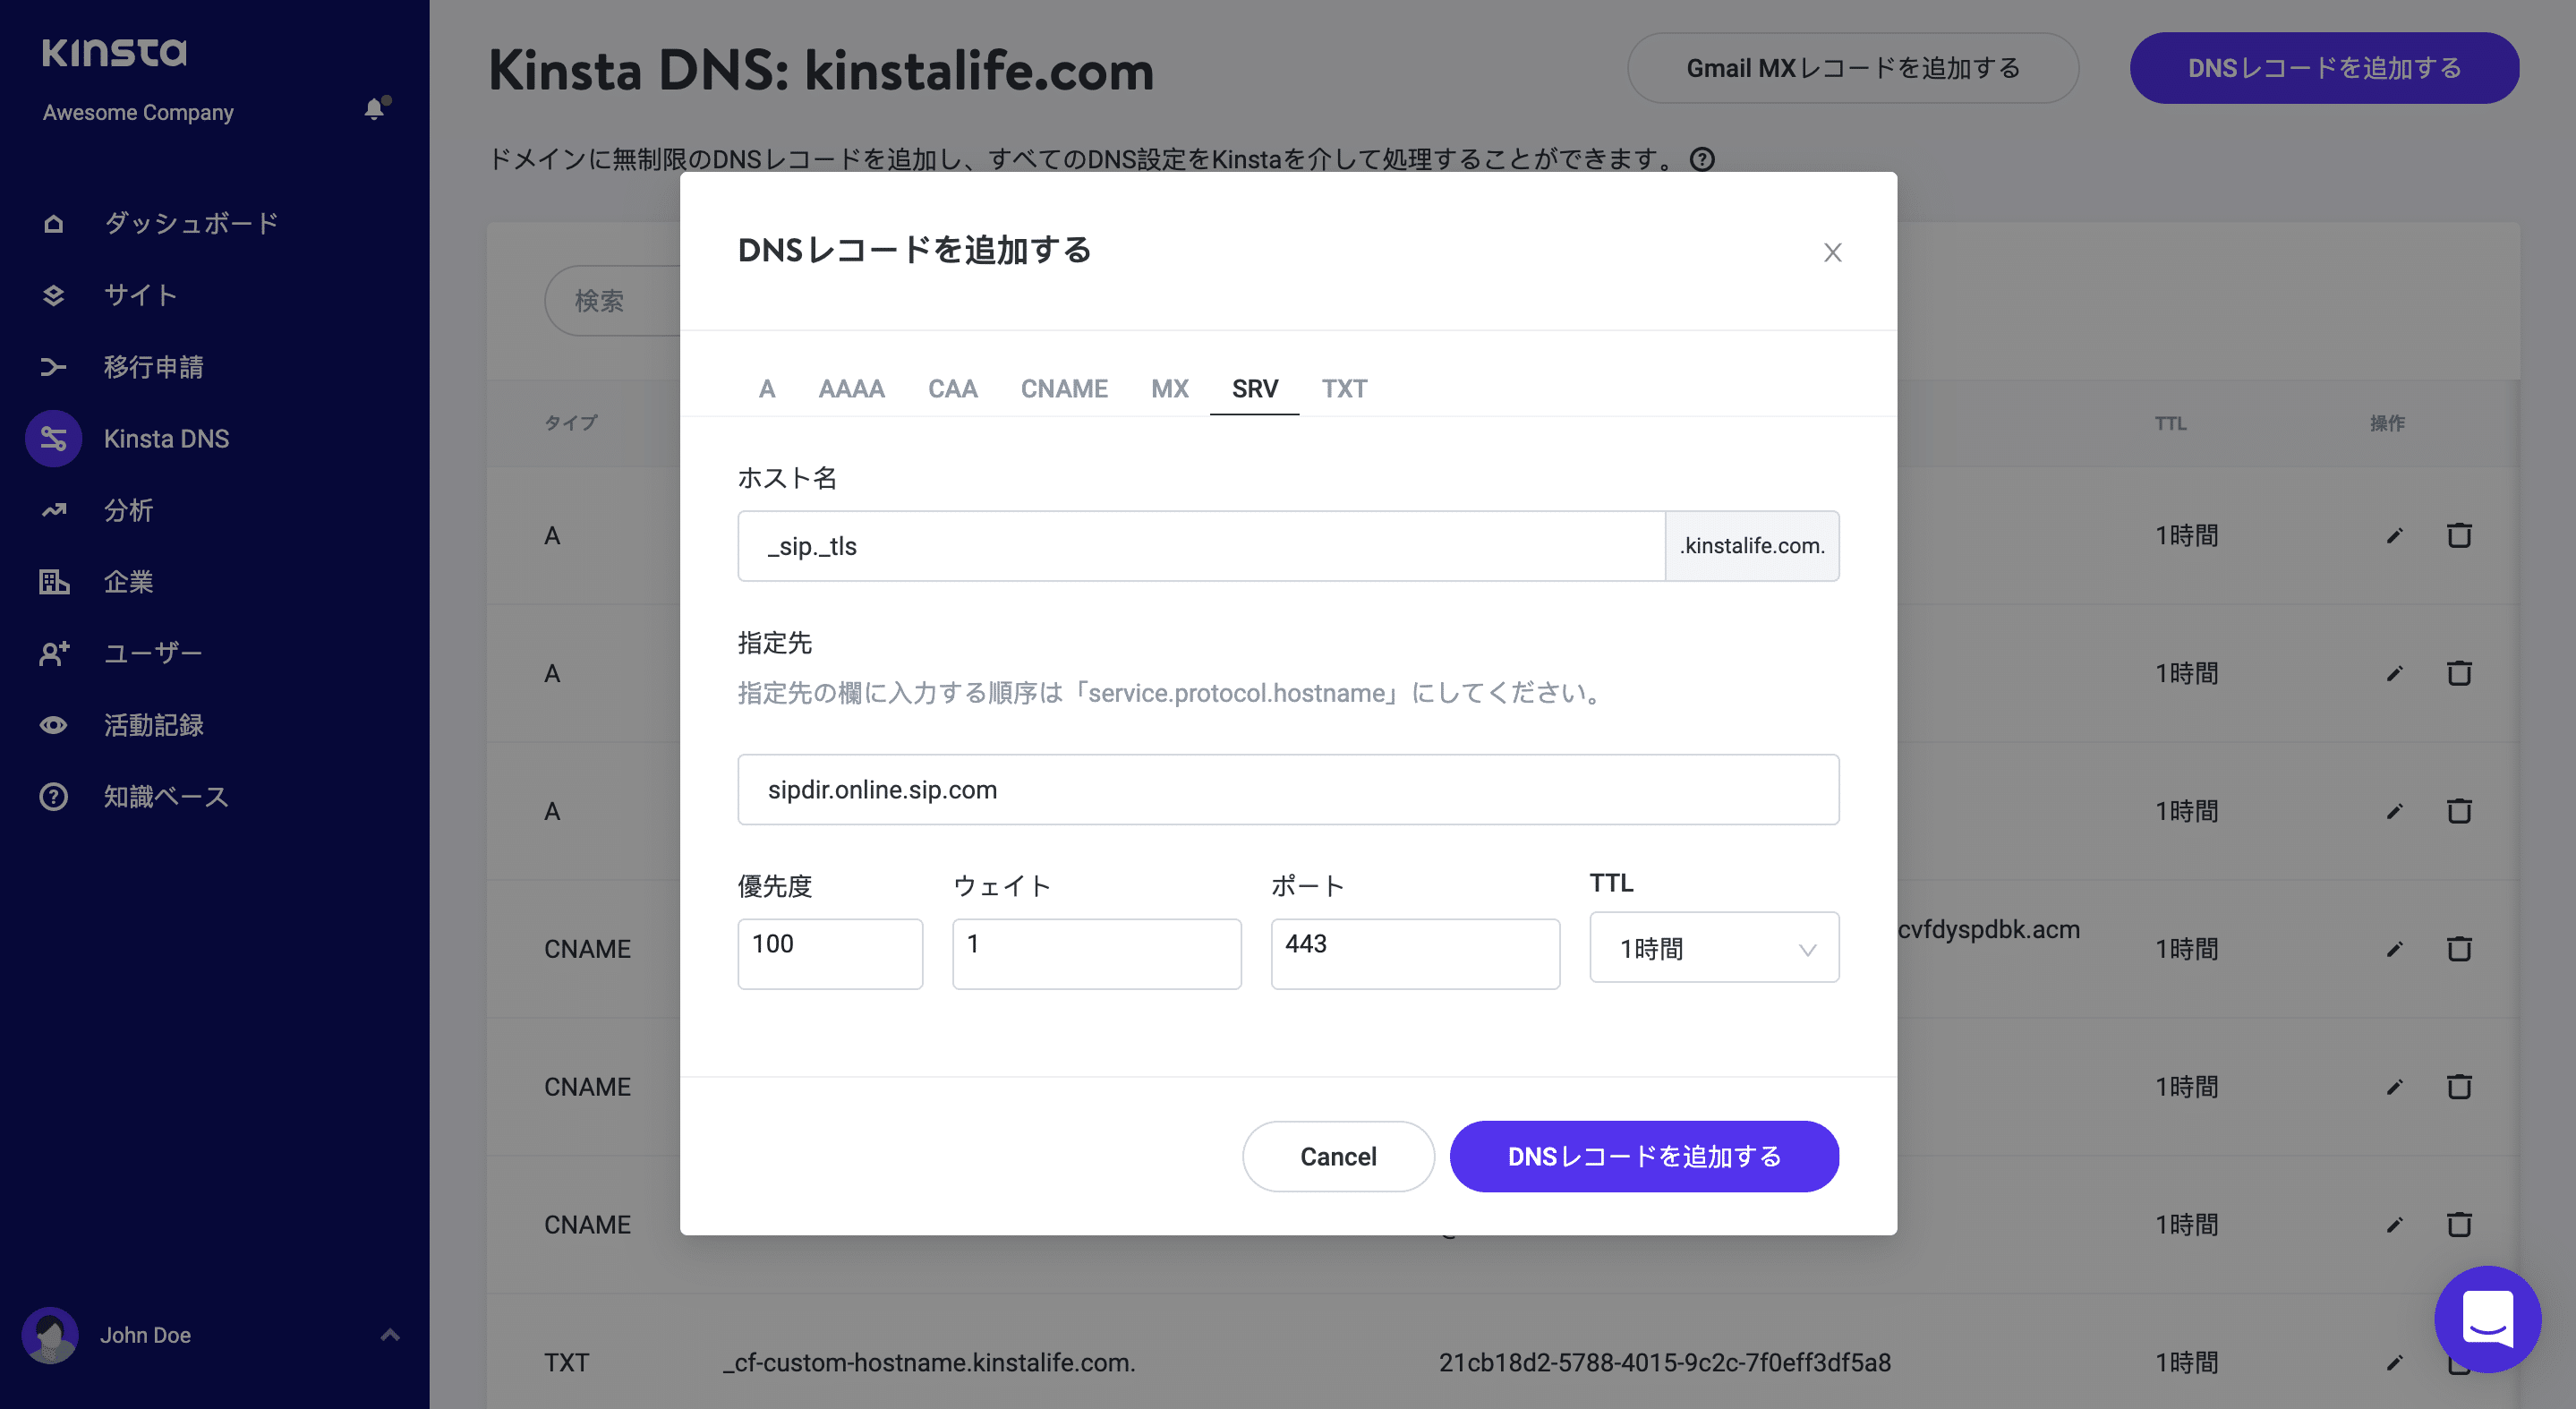 Kinsta DNSでSRVレコードを追加する